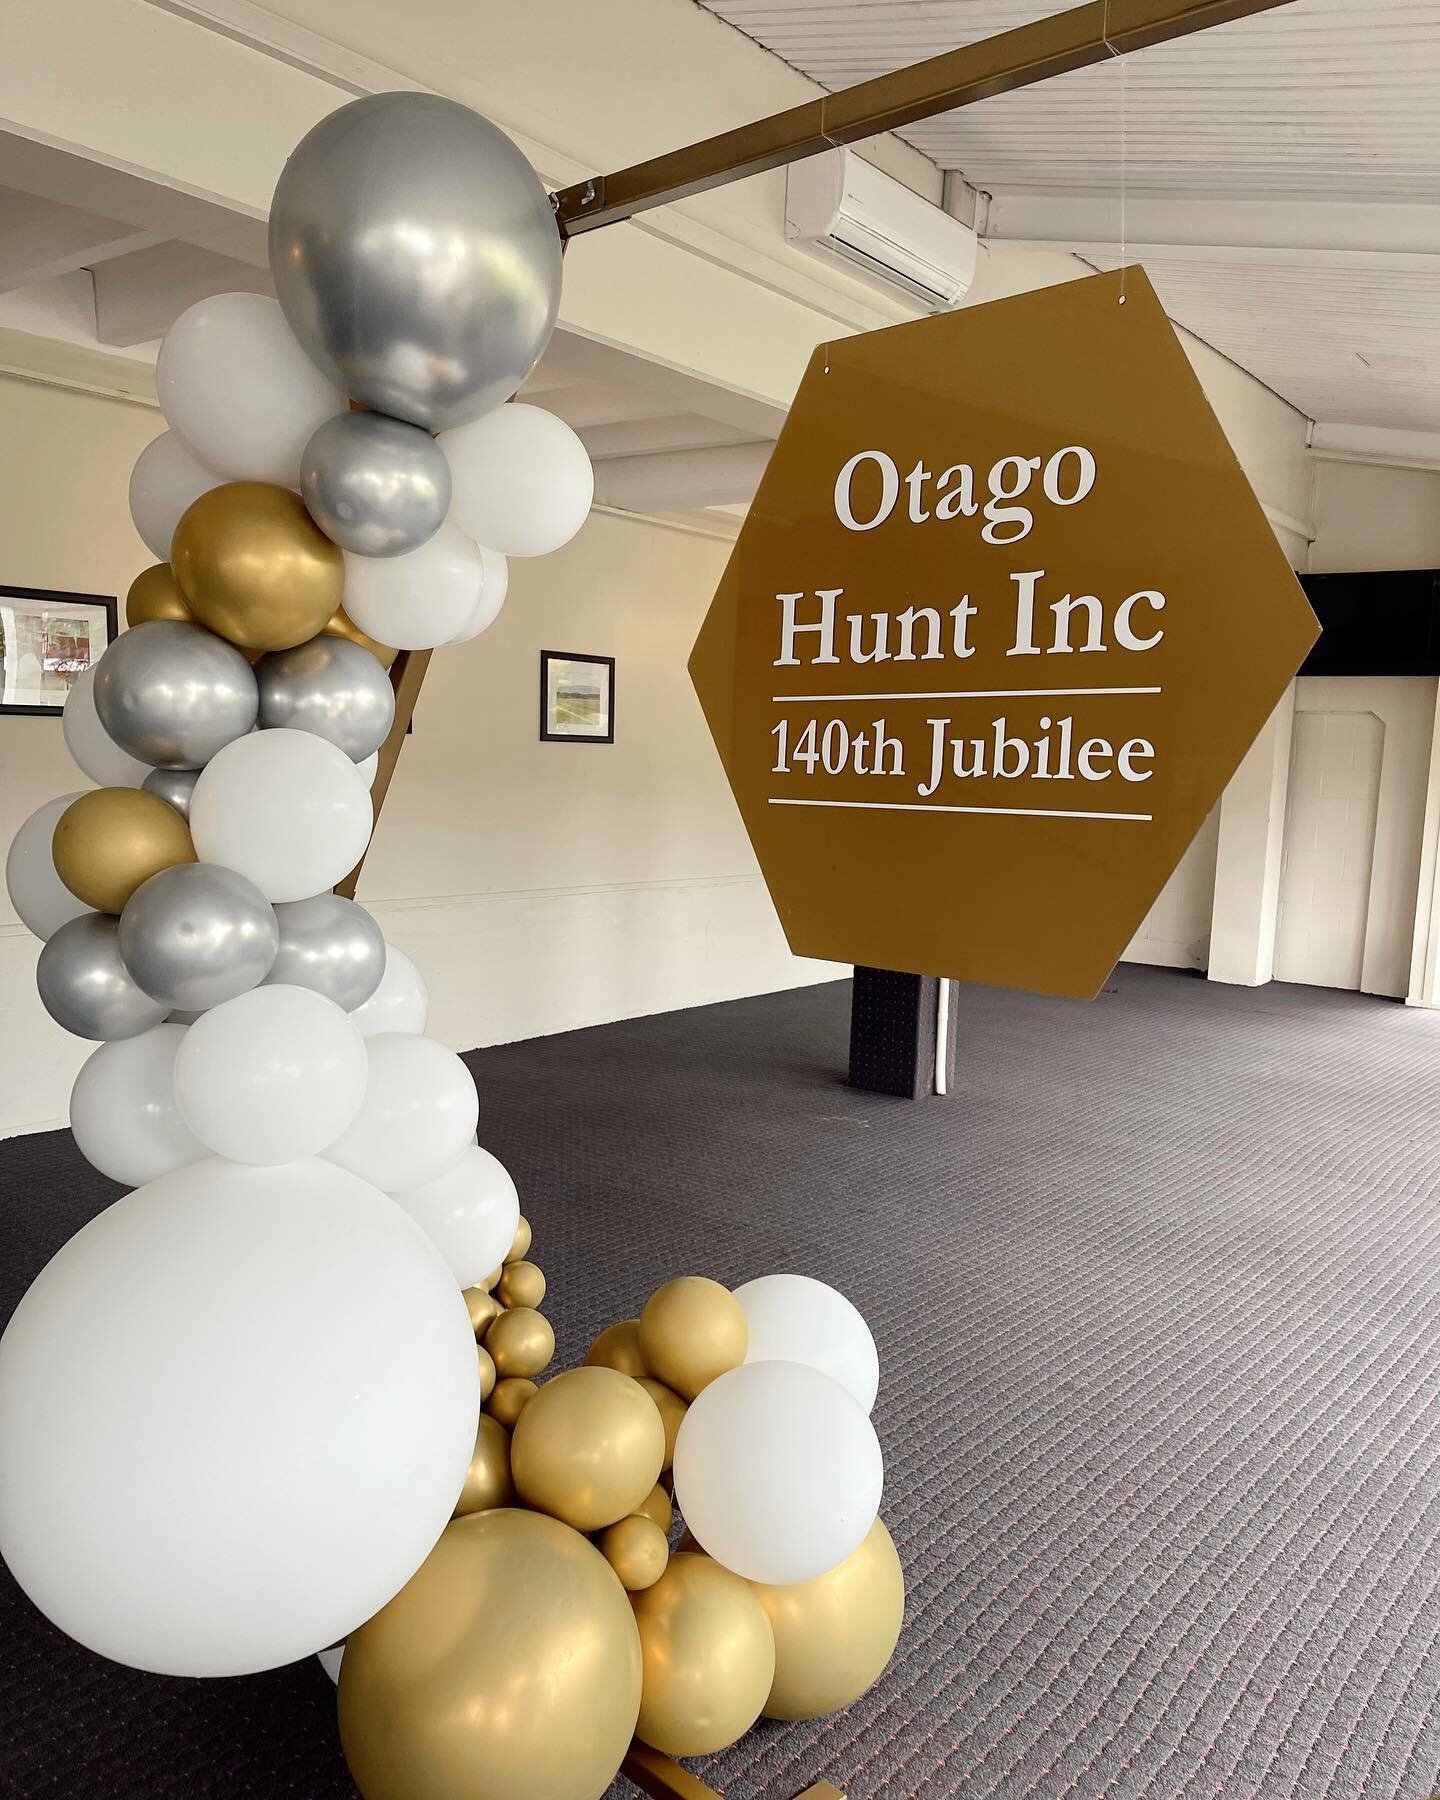 &mdash;&mdash; all class at Wingatui 🫶

Cheers to 140 years of Otago Hunt Inc 🐎🐕